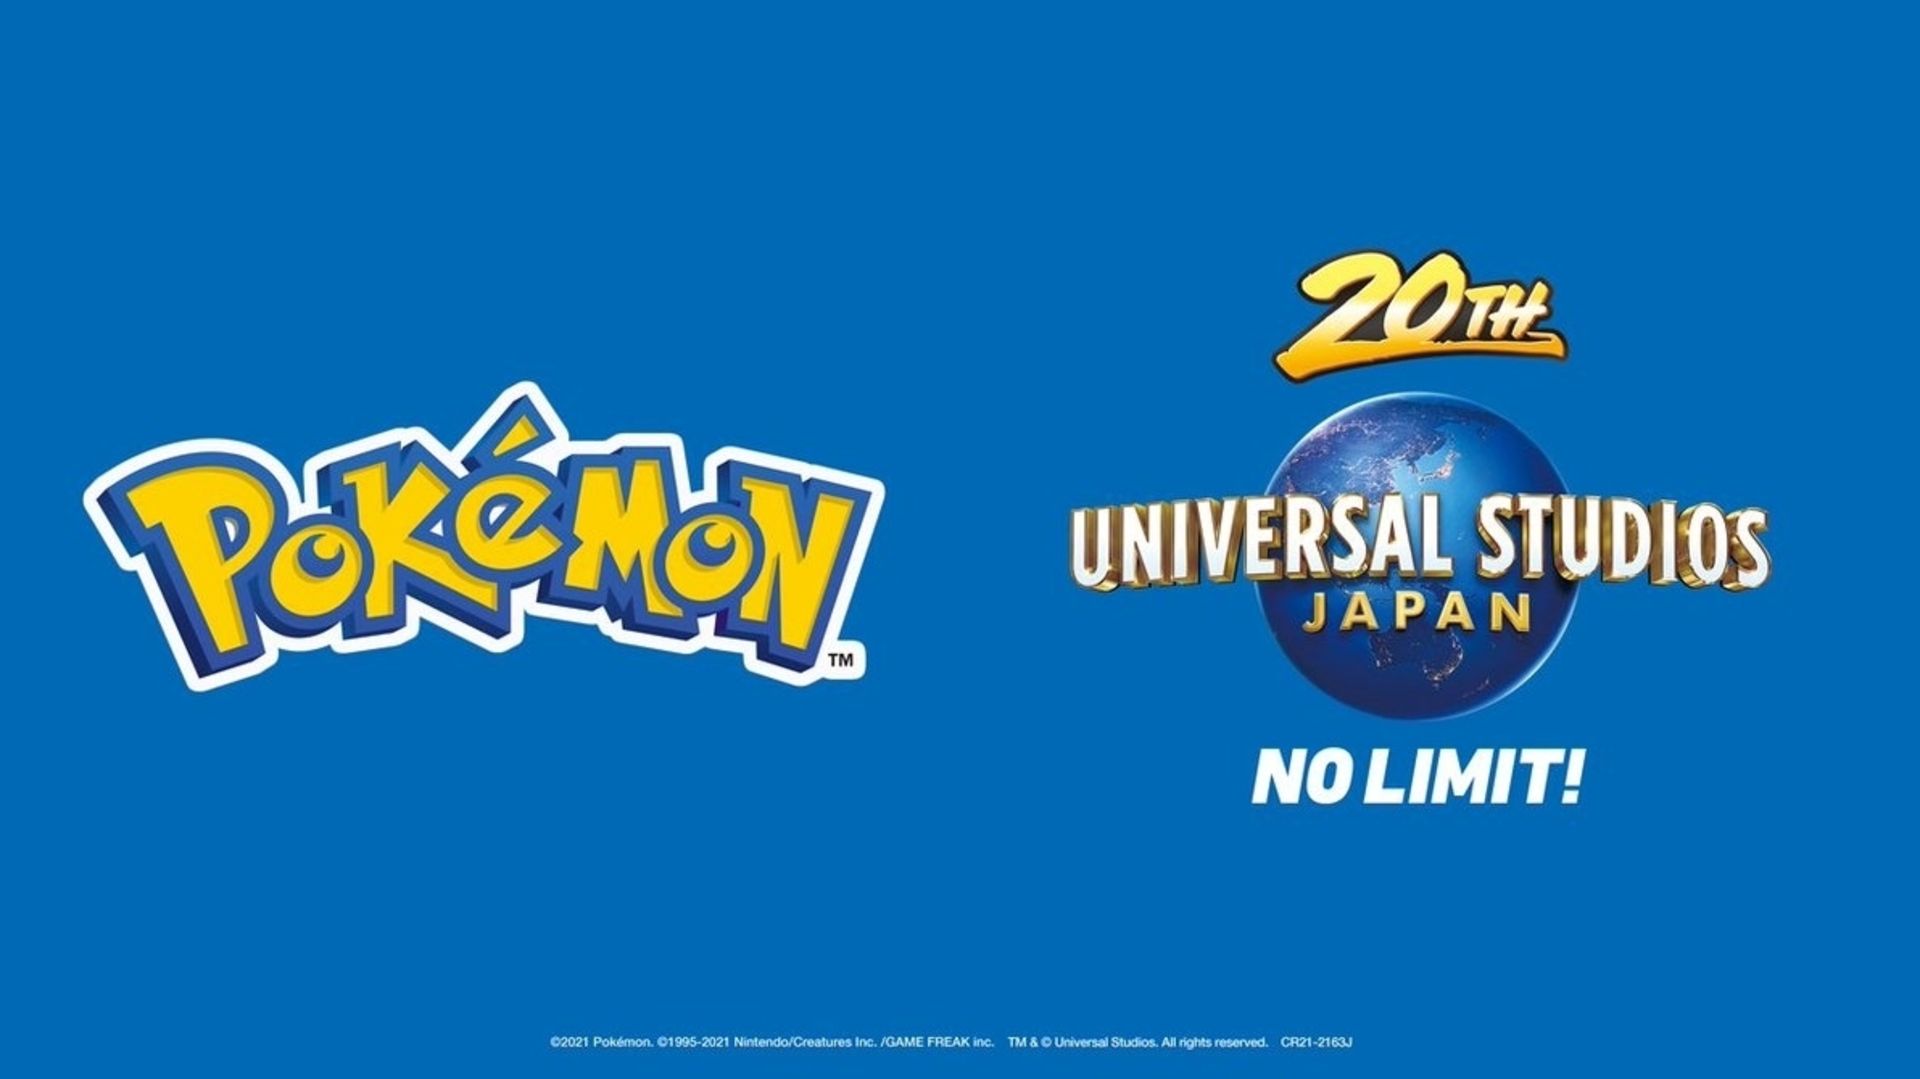 Pokeman Is Headed To Universal Studios Japan